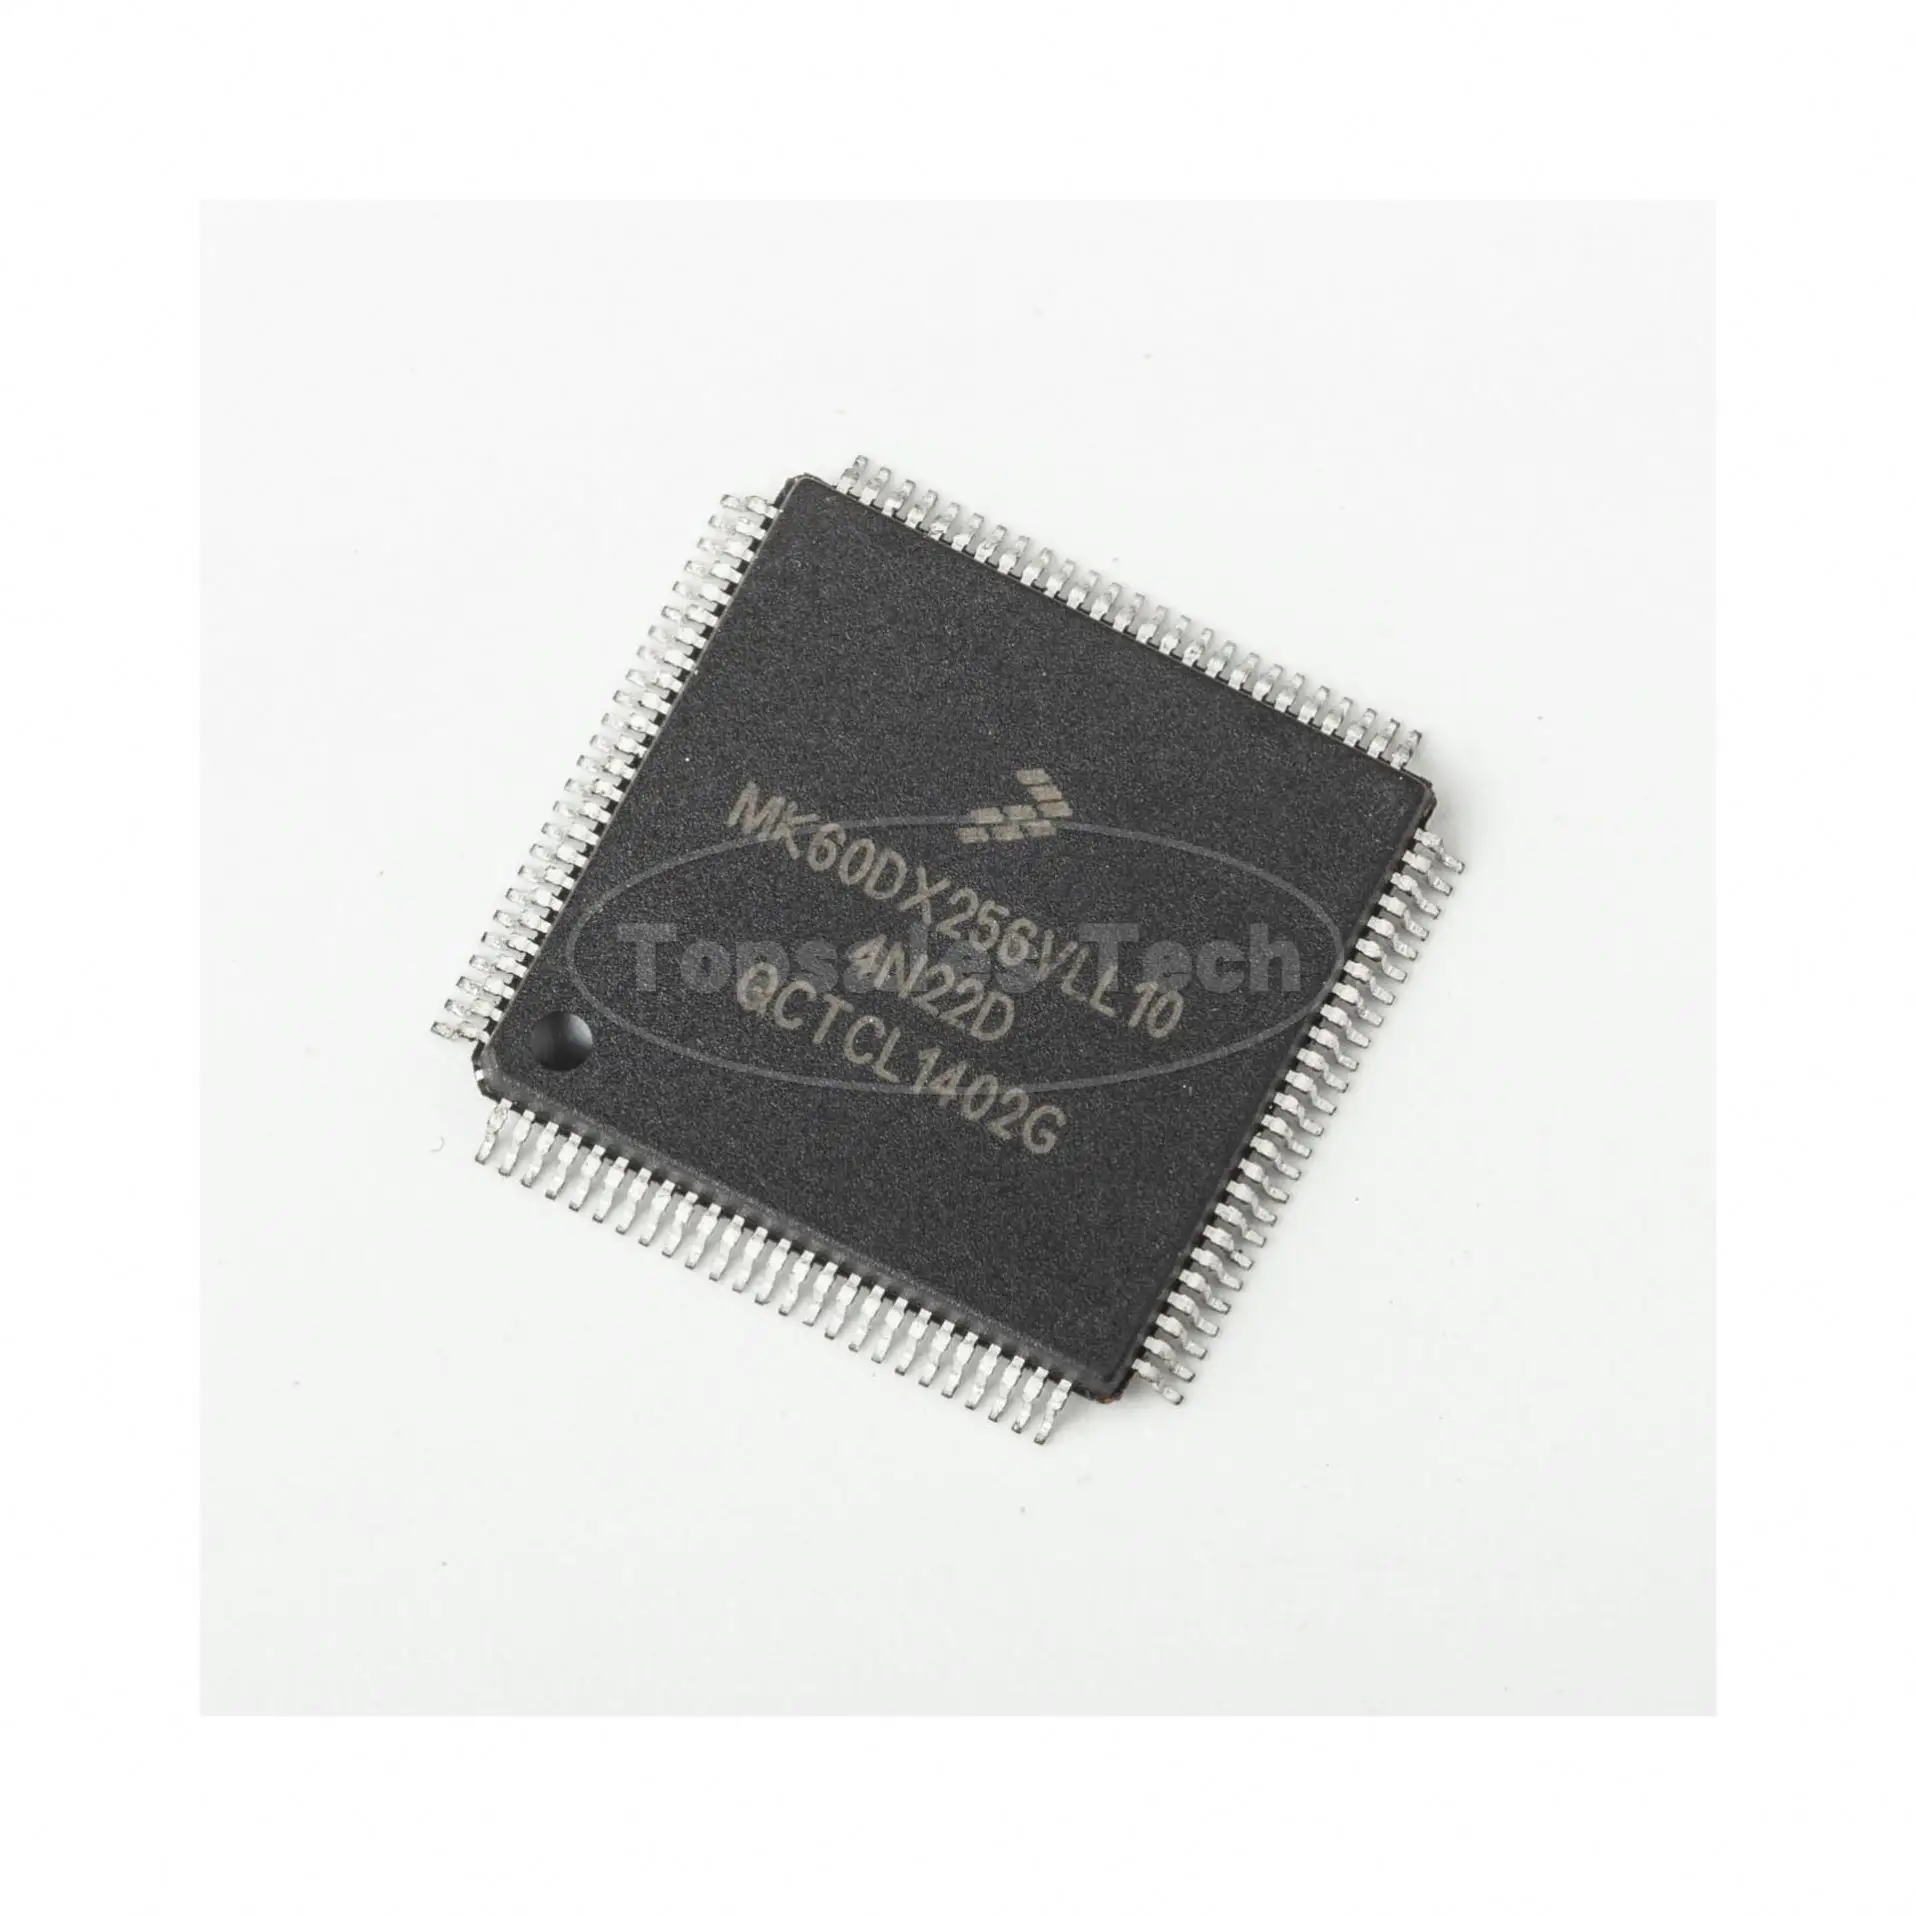 MKL16Z128VFM4 QFN-32 Microprocessors FPGA PCB'A MCU MPU ARM Microcontrollers FOR